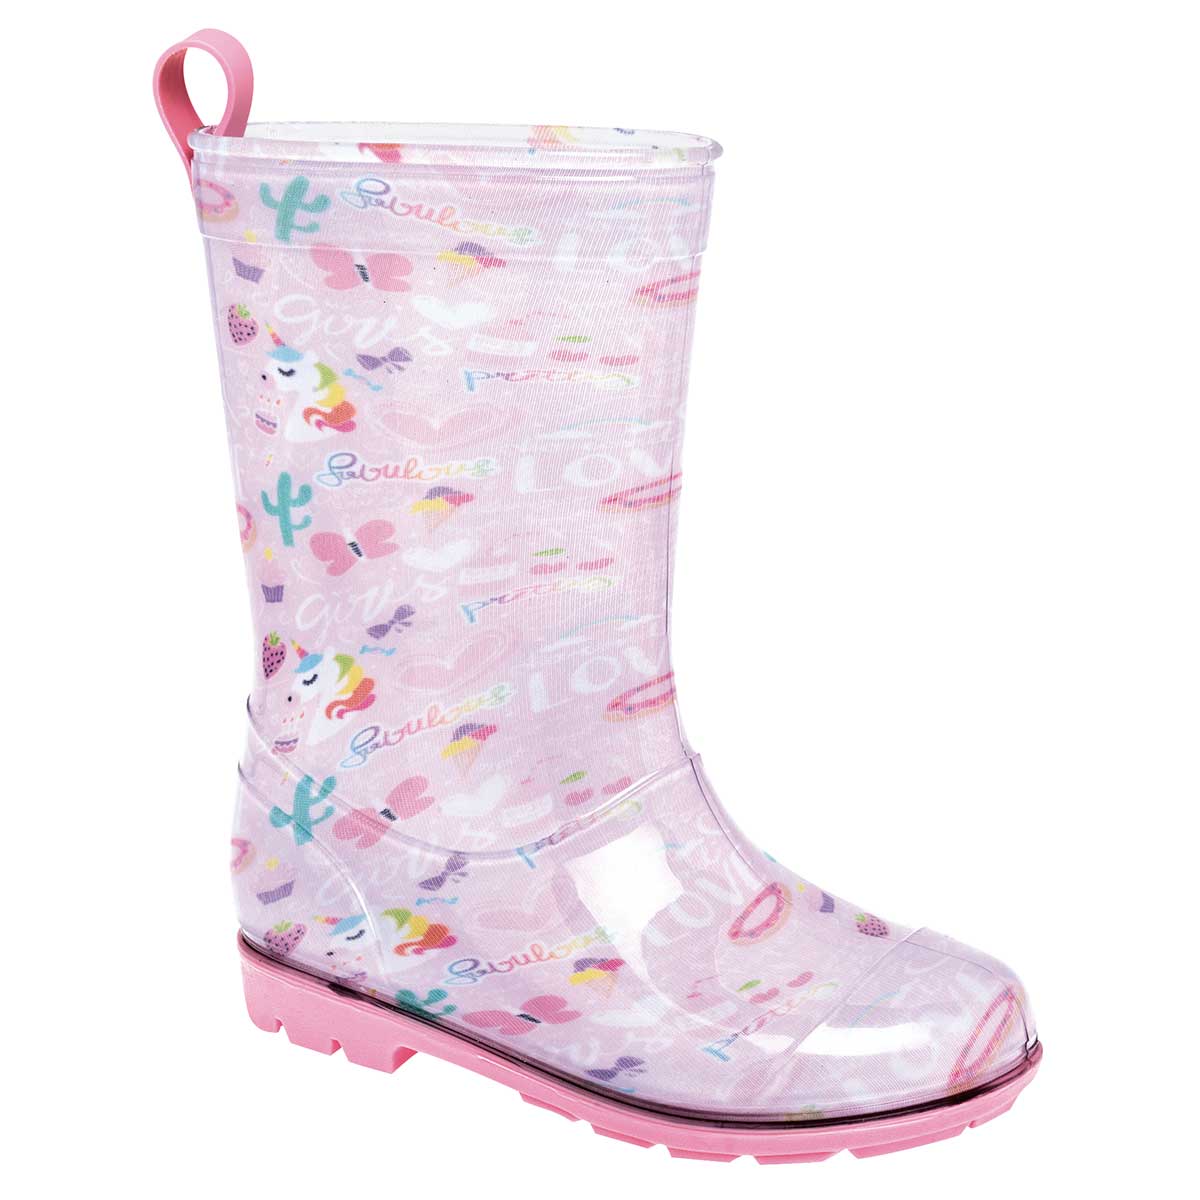 Pakar.com - Mayo: Regalos para mamá | Zapato para la lluvia para niña cod-105395